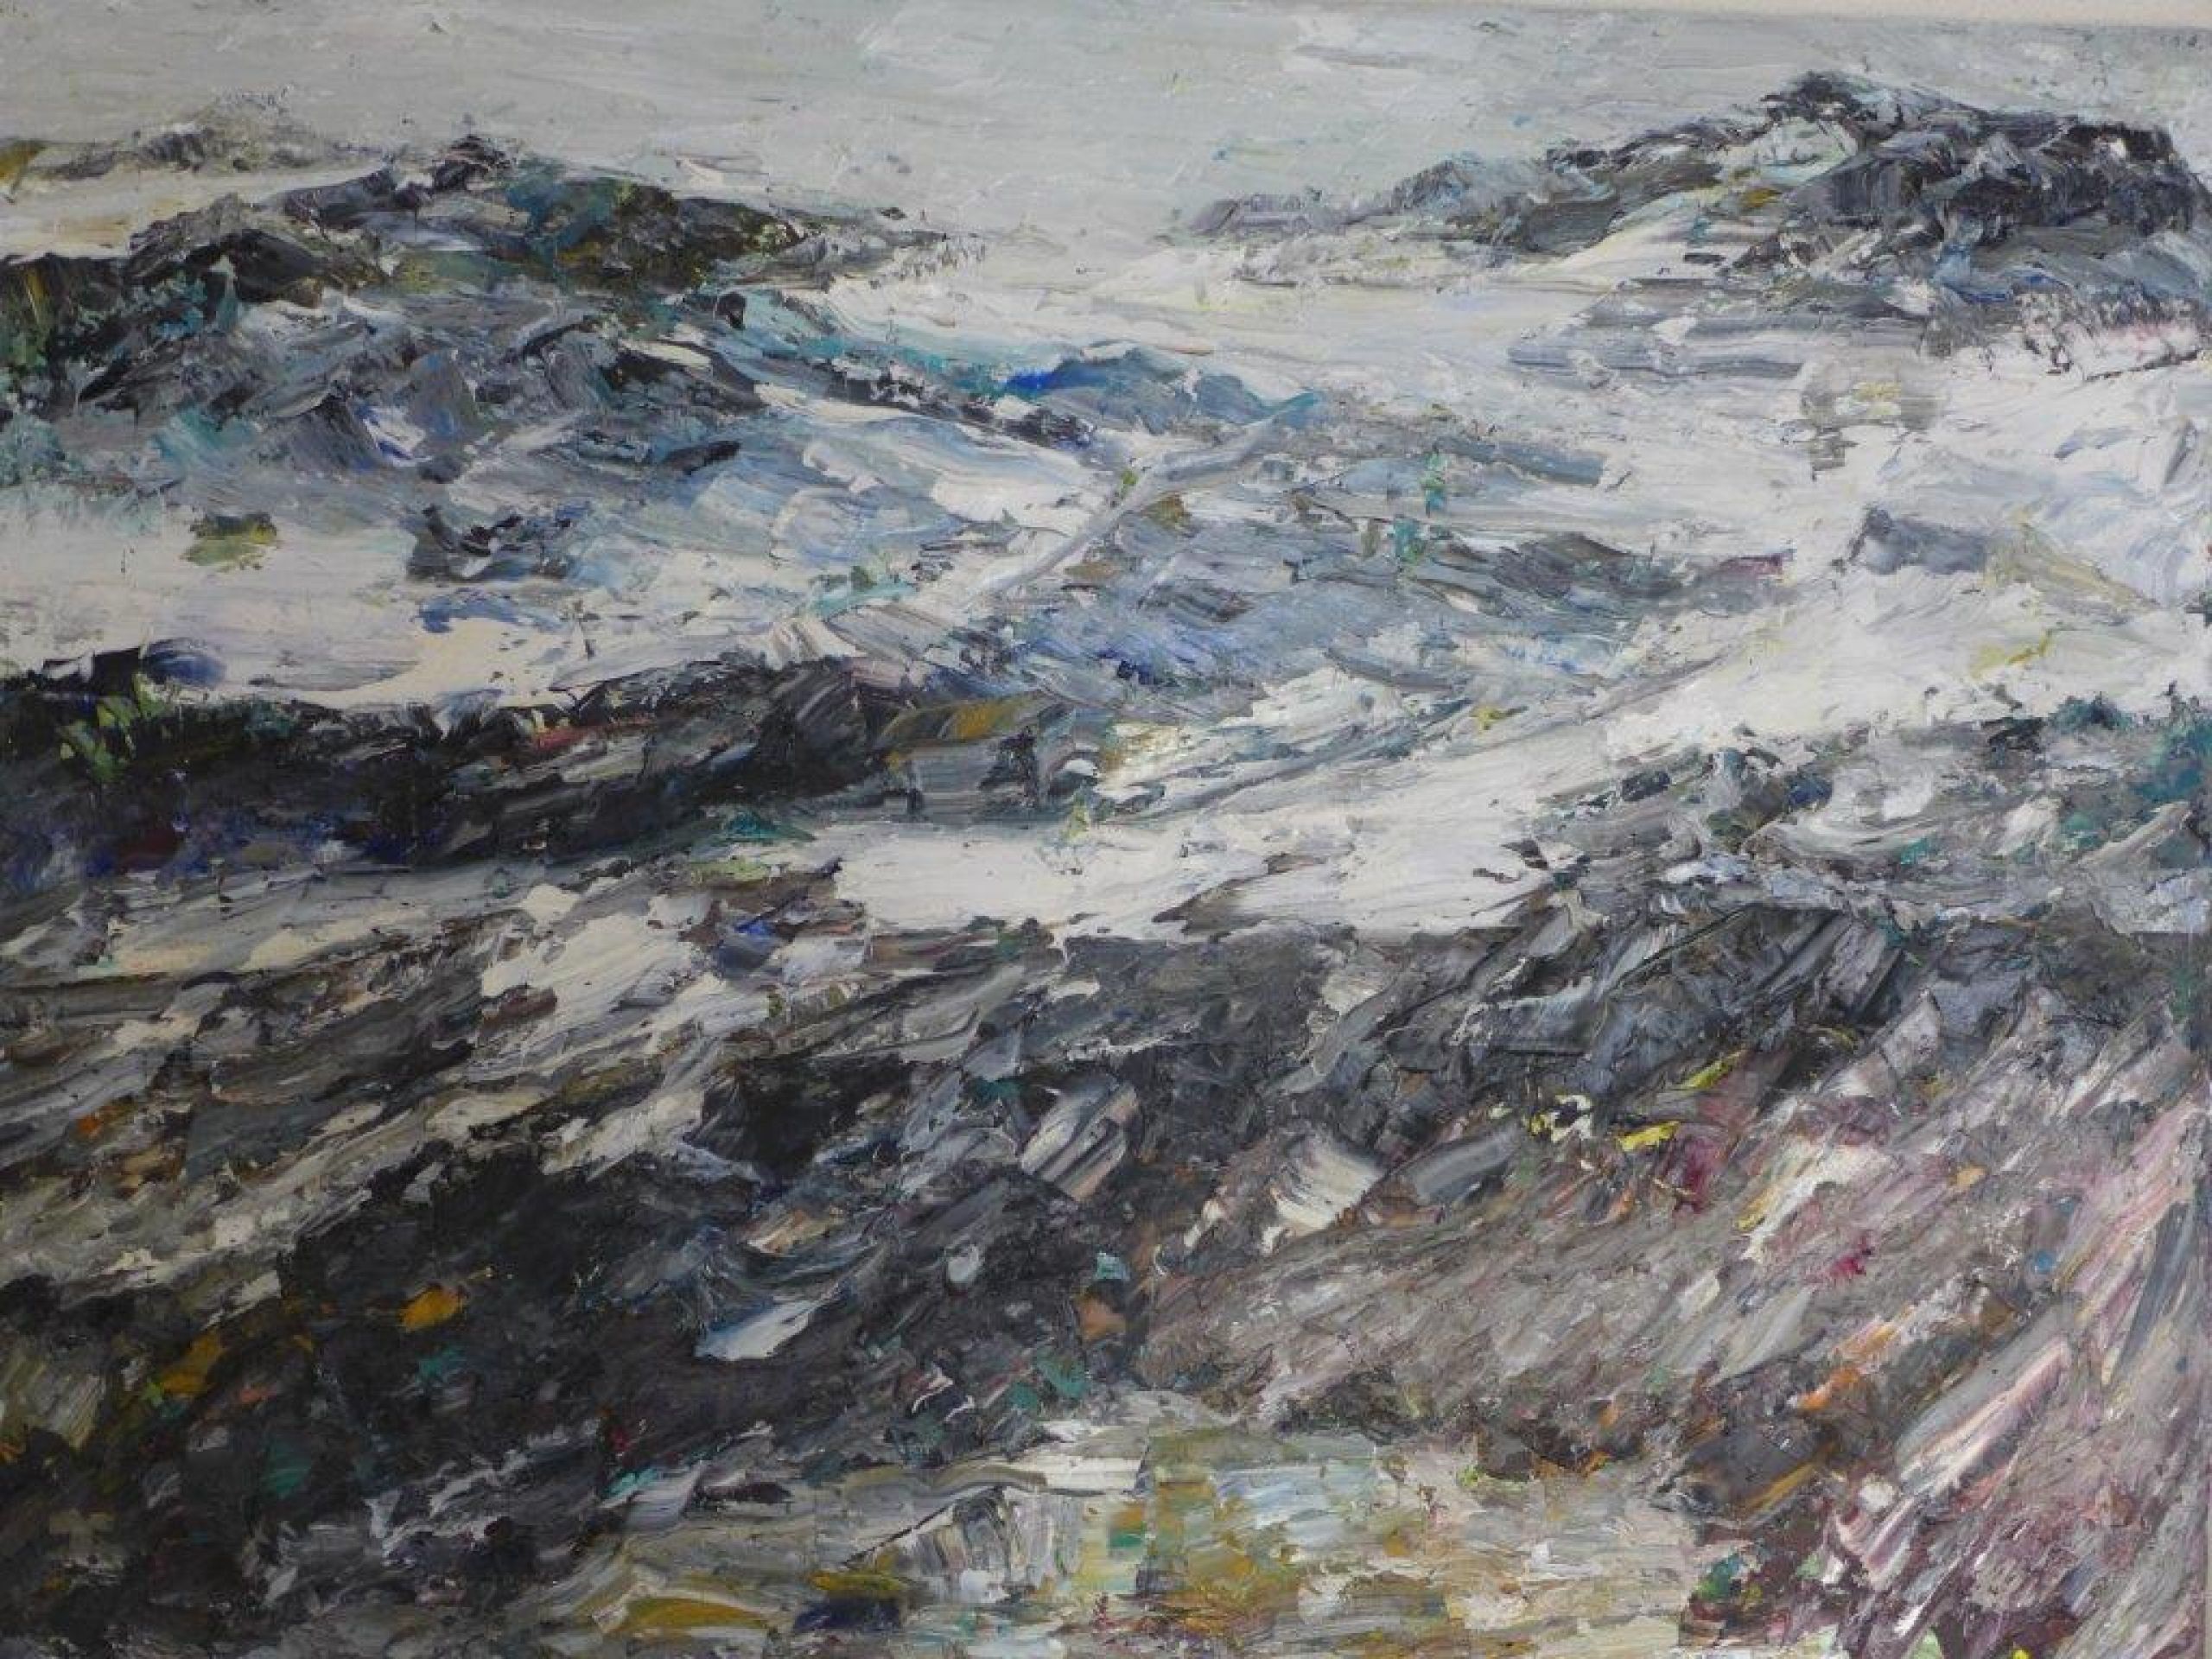 Rudi Weiss, 'Berge', 2014, Öl auf Leinwand, 80 x 100 cm, 950 € 